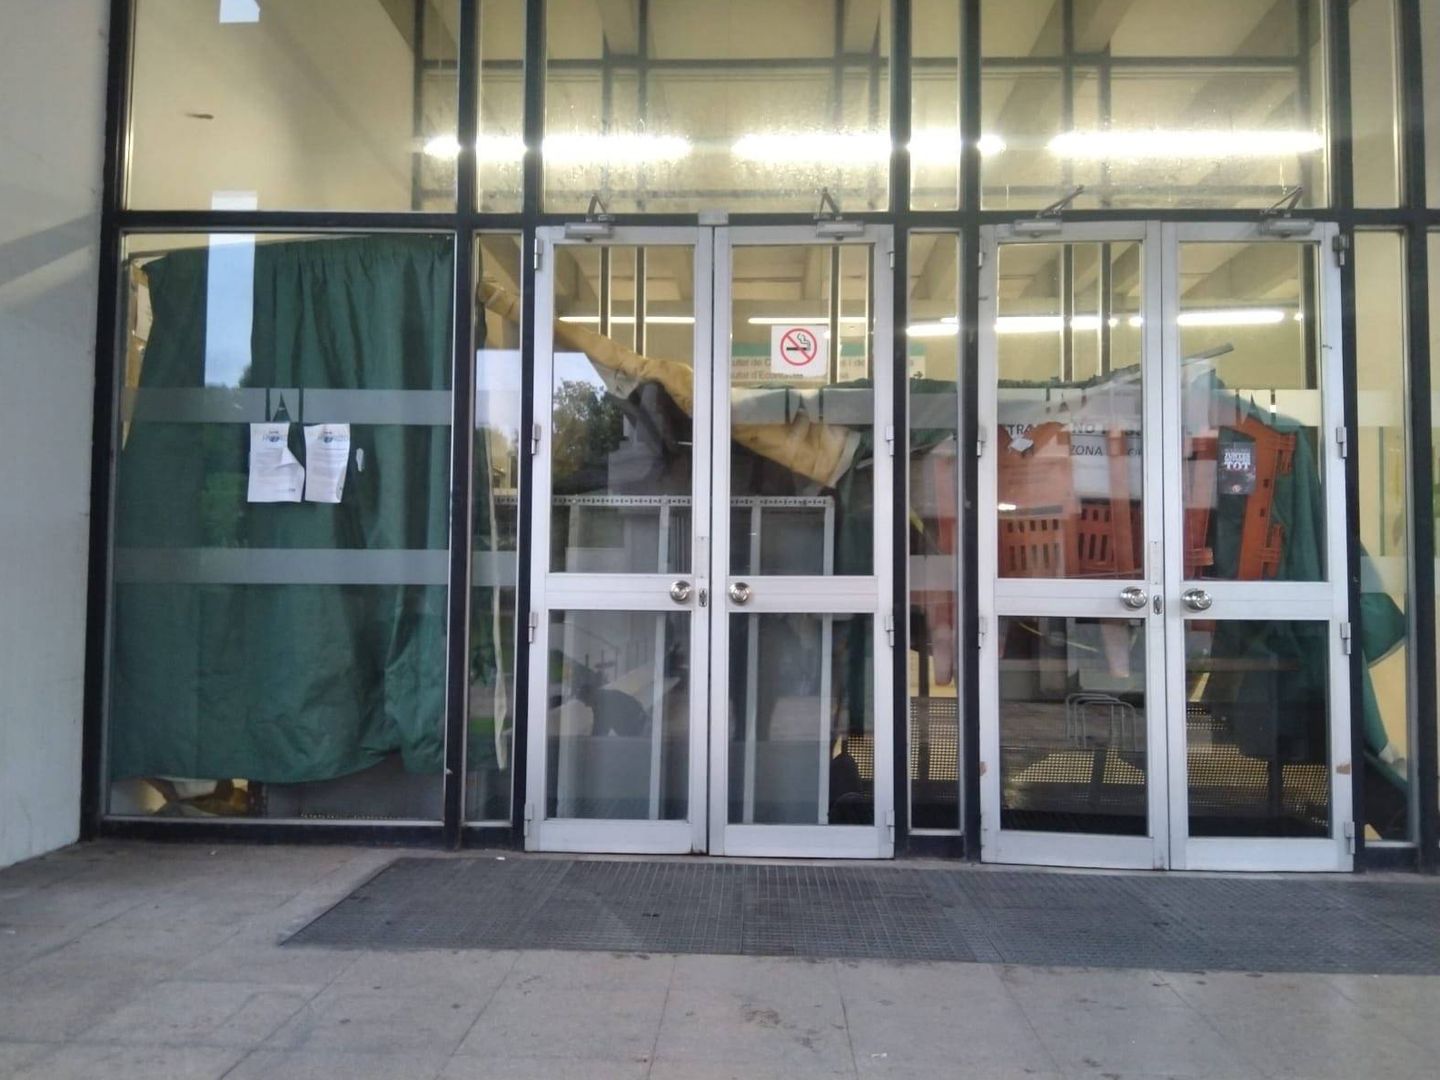 Barricada en la Universidad Autónoma de Barcelona, la semana pasada. (Twitter)